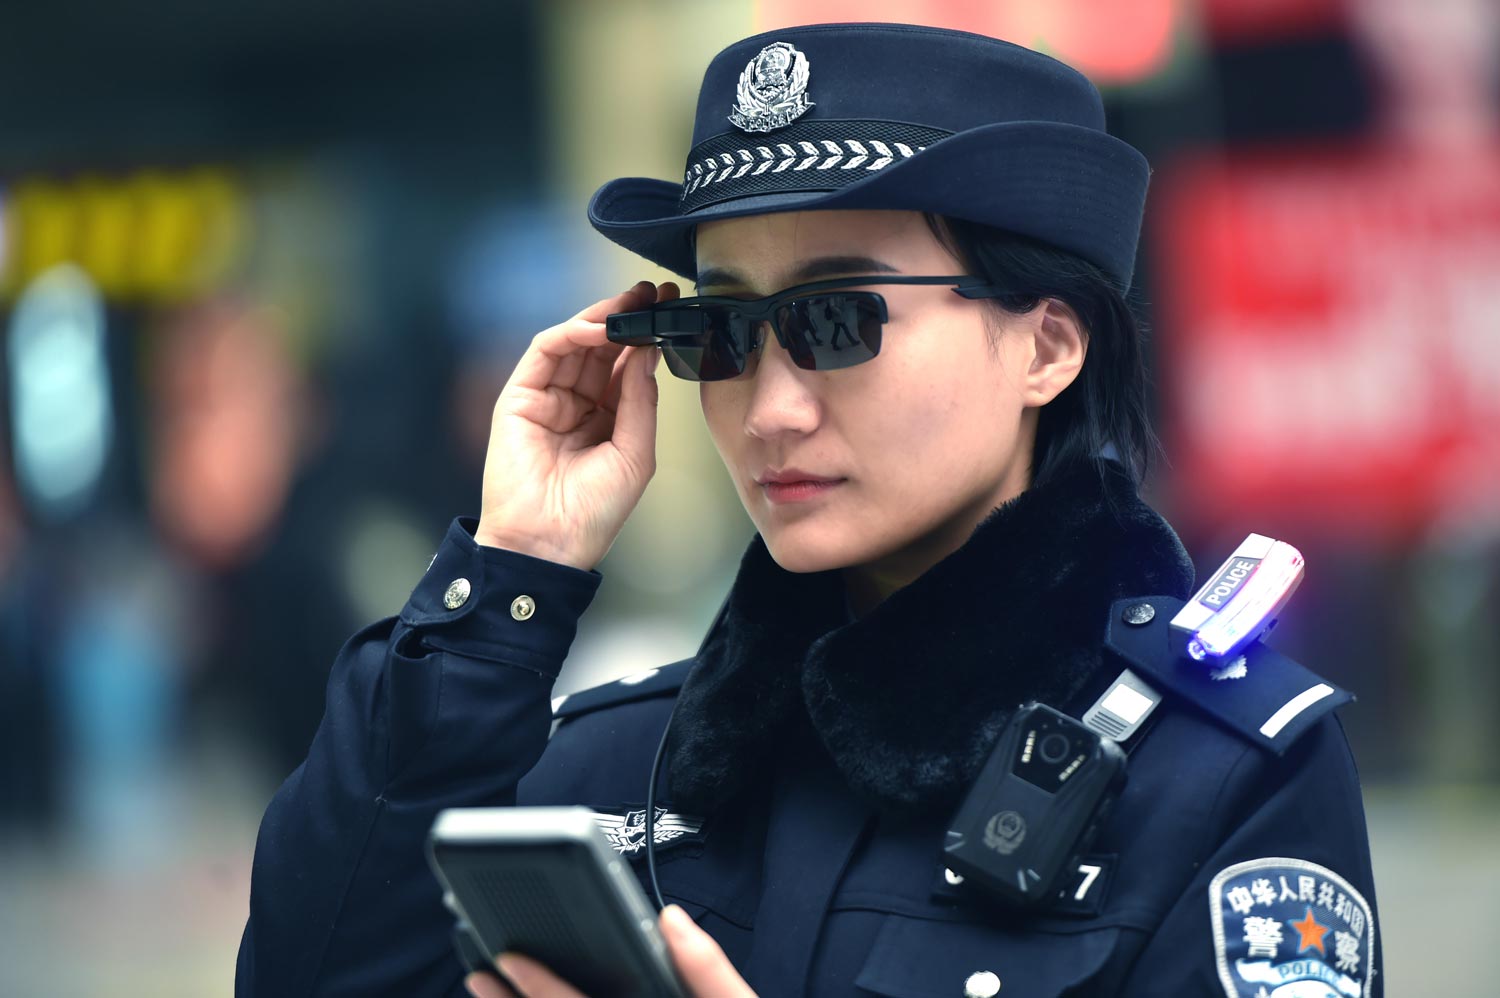 Polis China Kaca Mata Pintar 2